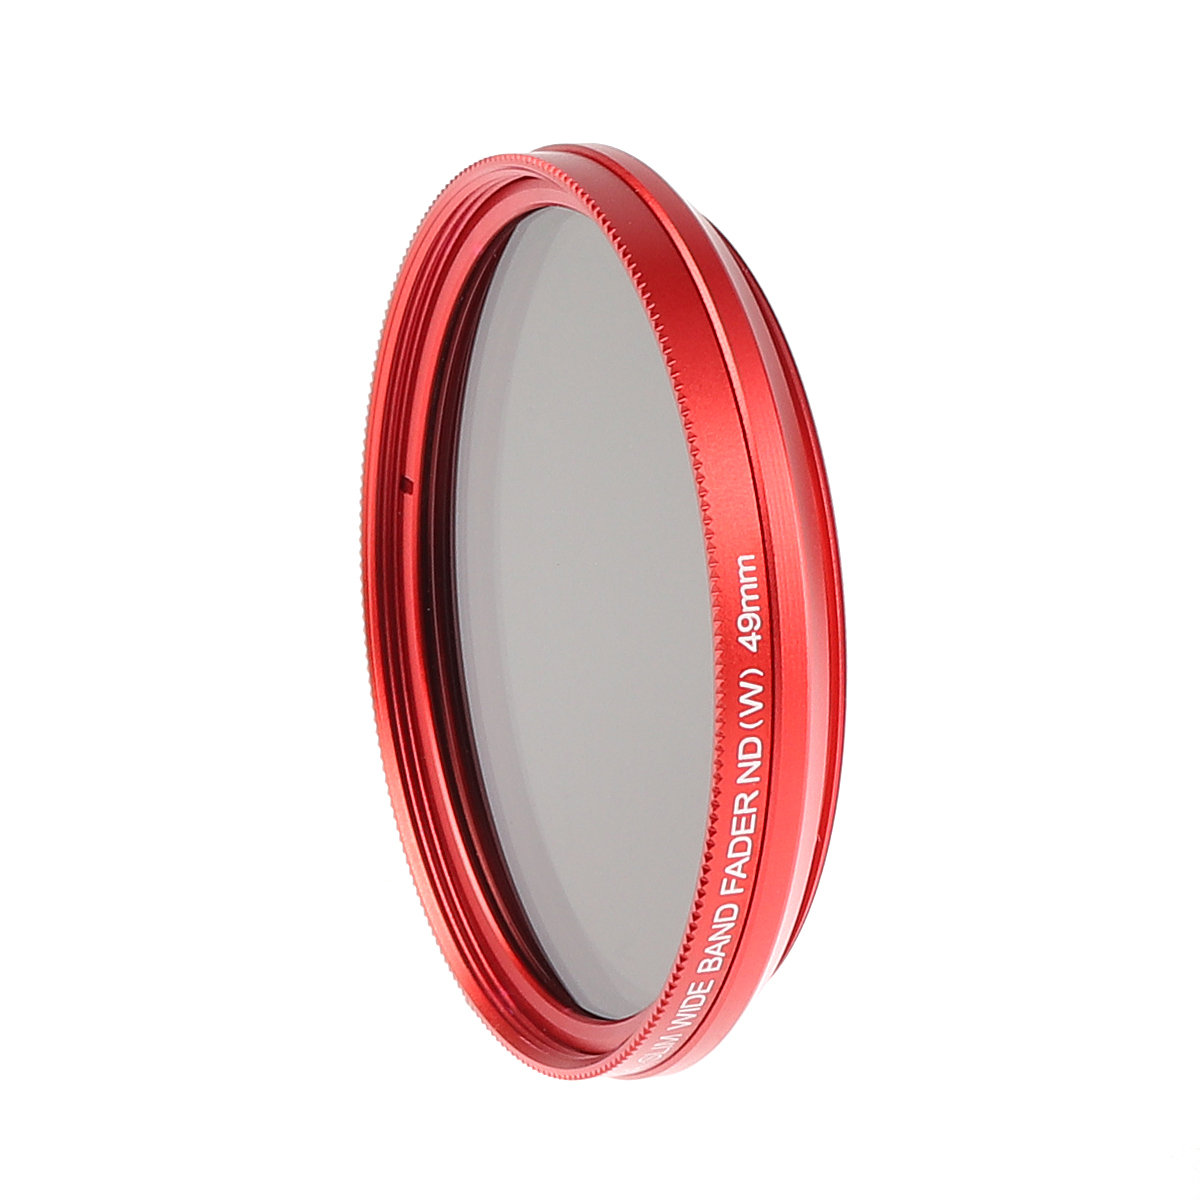 Fotga slim Fader ND filtro lens protector variable neutral density nd2 to nd400 